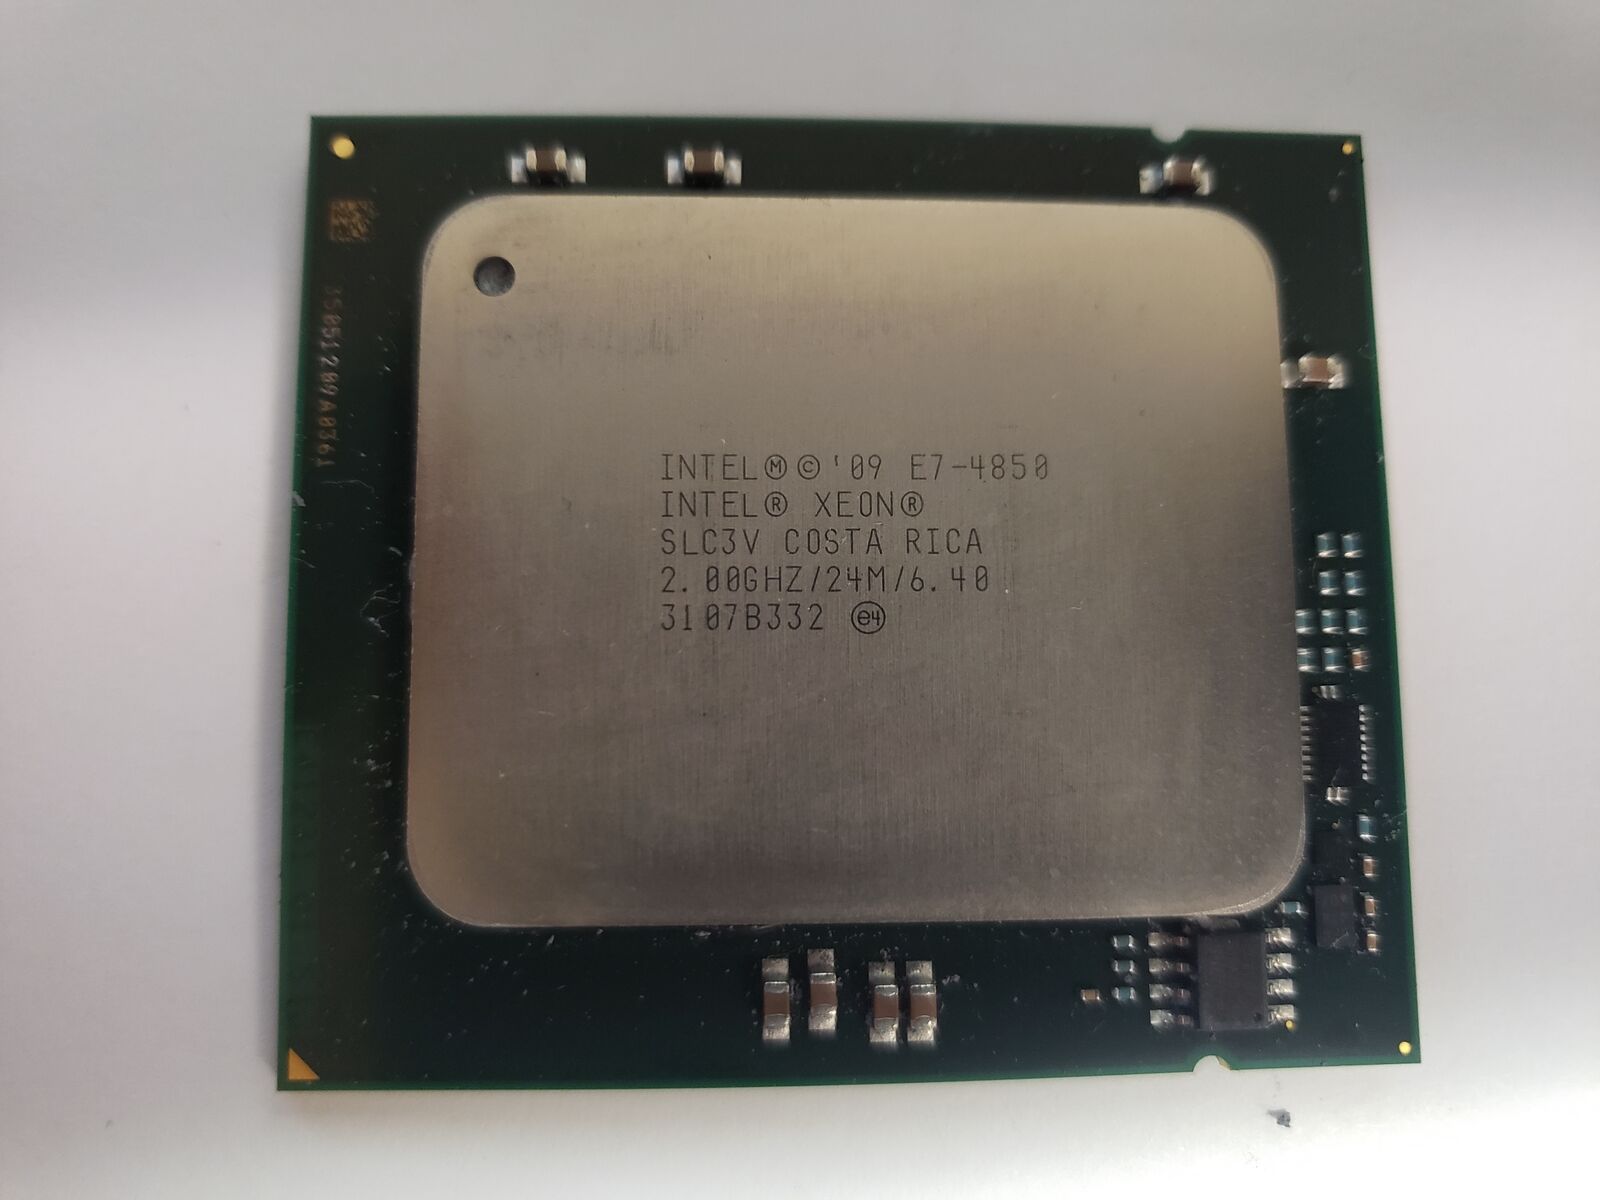 Lot of 4 Intel Xeon E7-4850 SLC3V 2.0GHz 24M 10 Core LGA 1567 CPU Processor